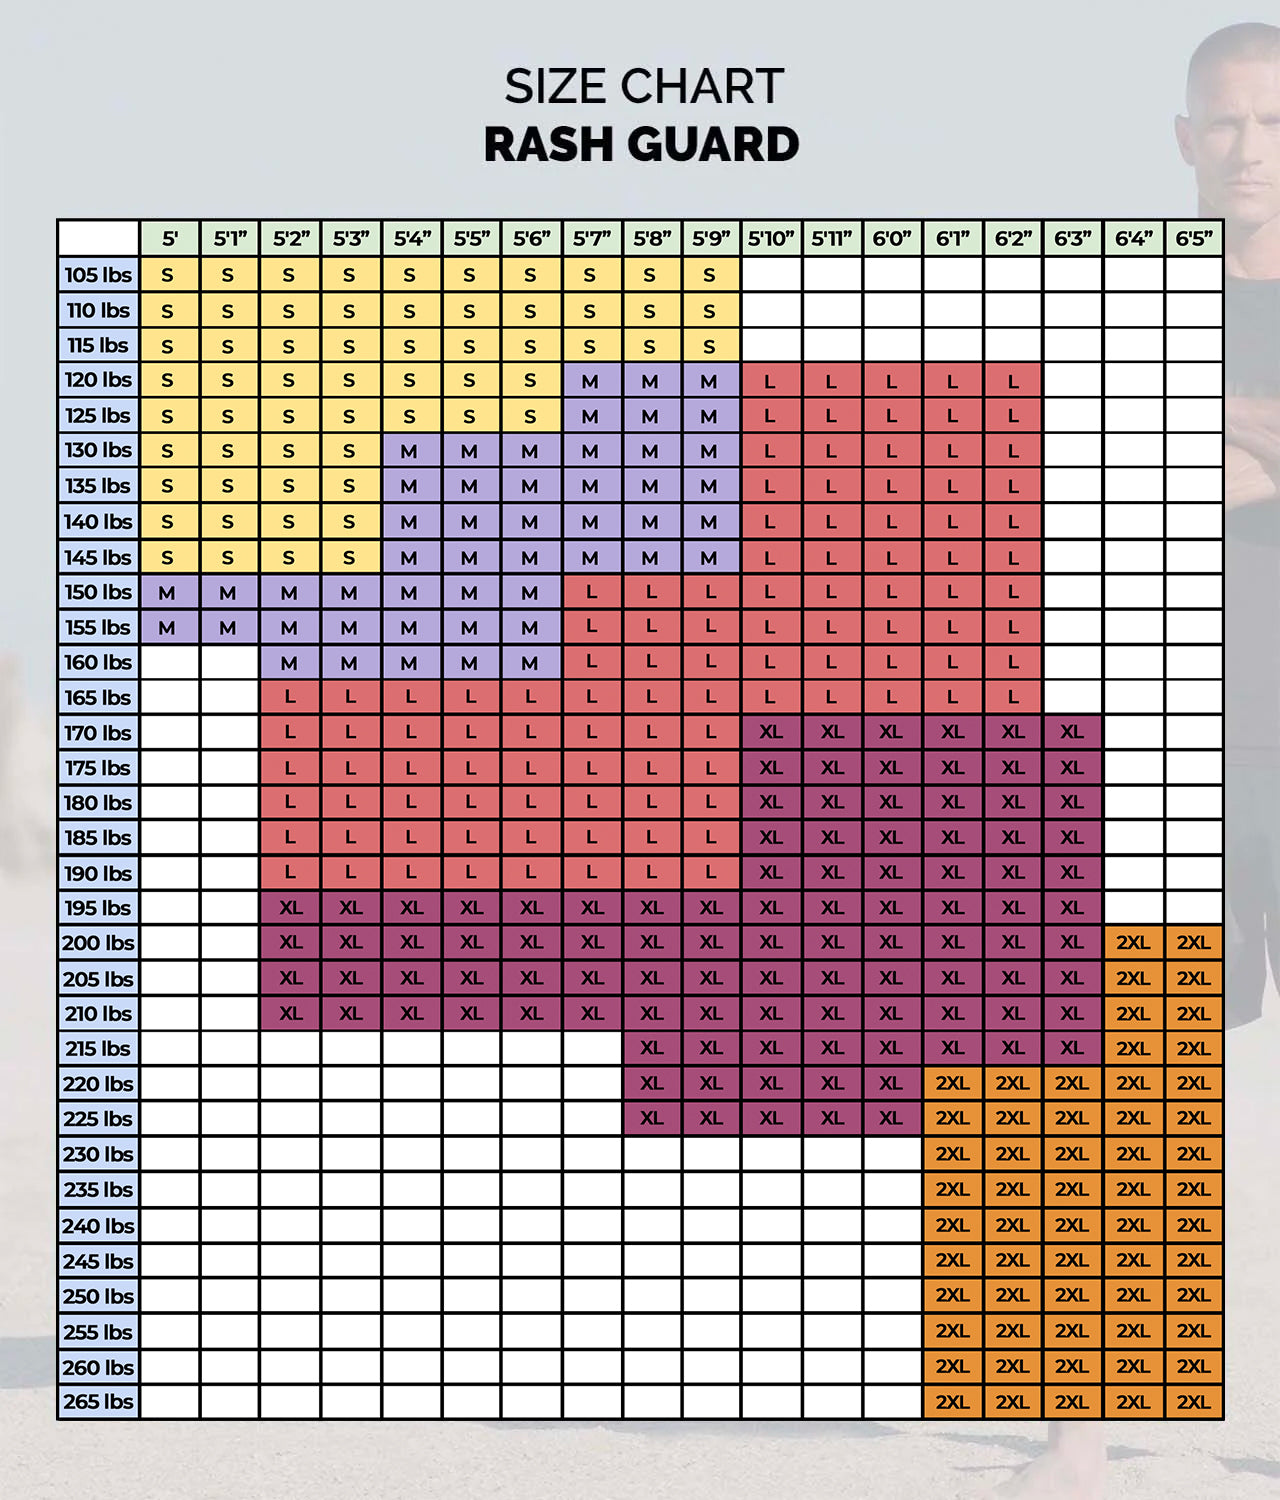 Elite Sports Men's Standard Red Short Sleeve MMA Rash Guard Size Guide